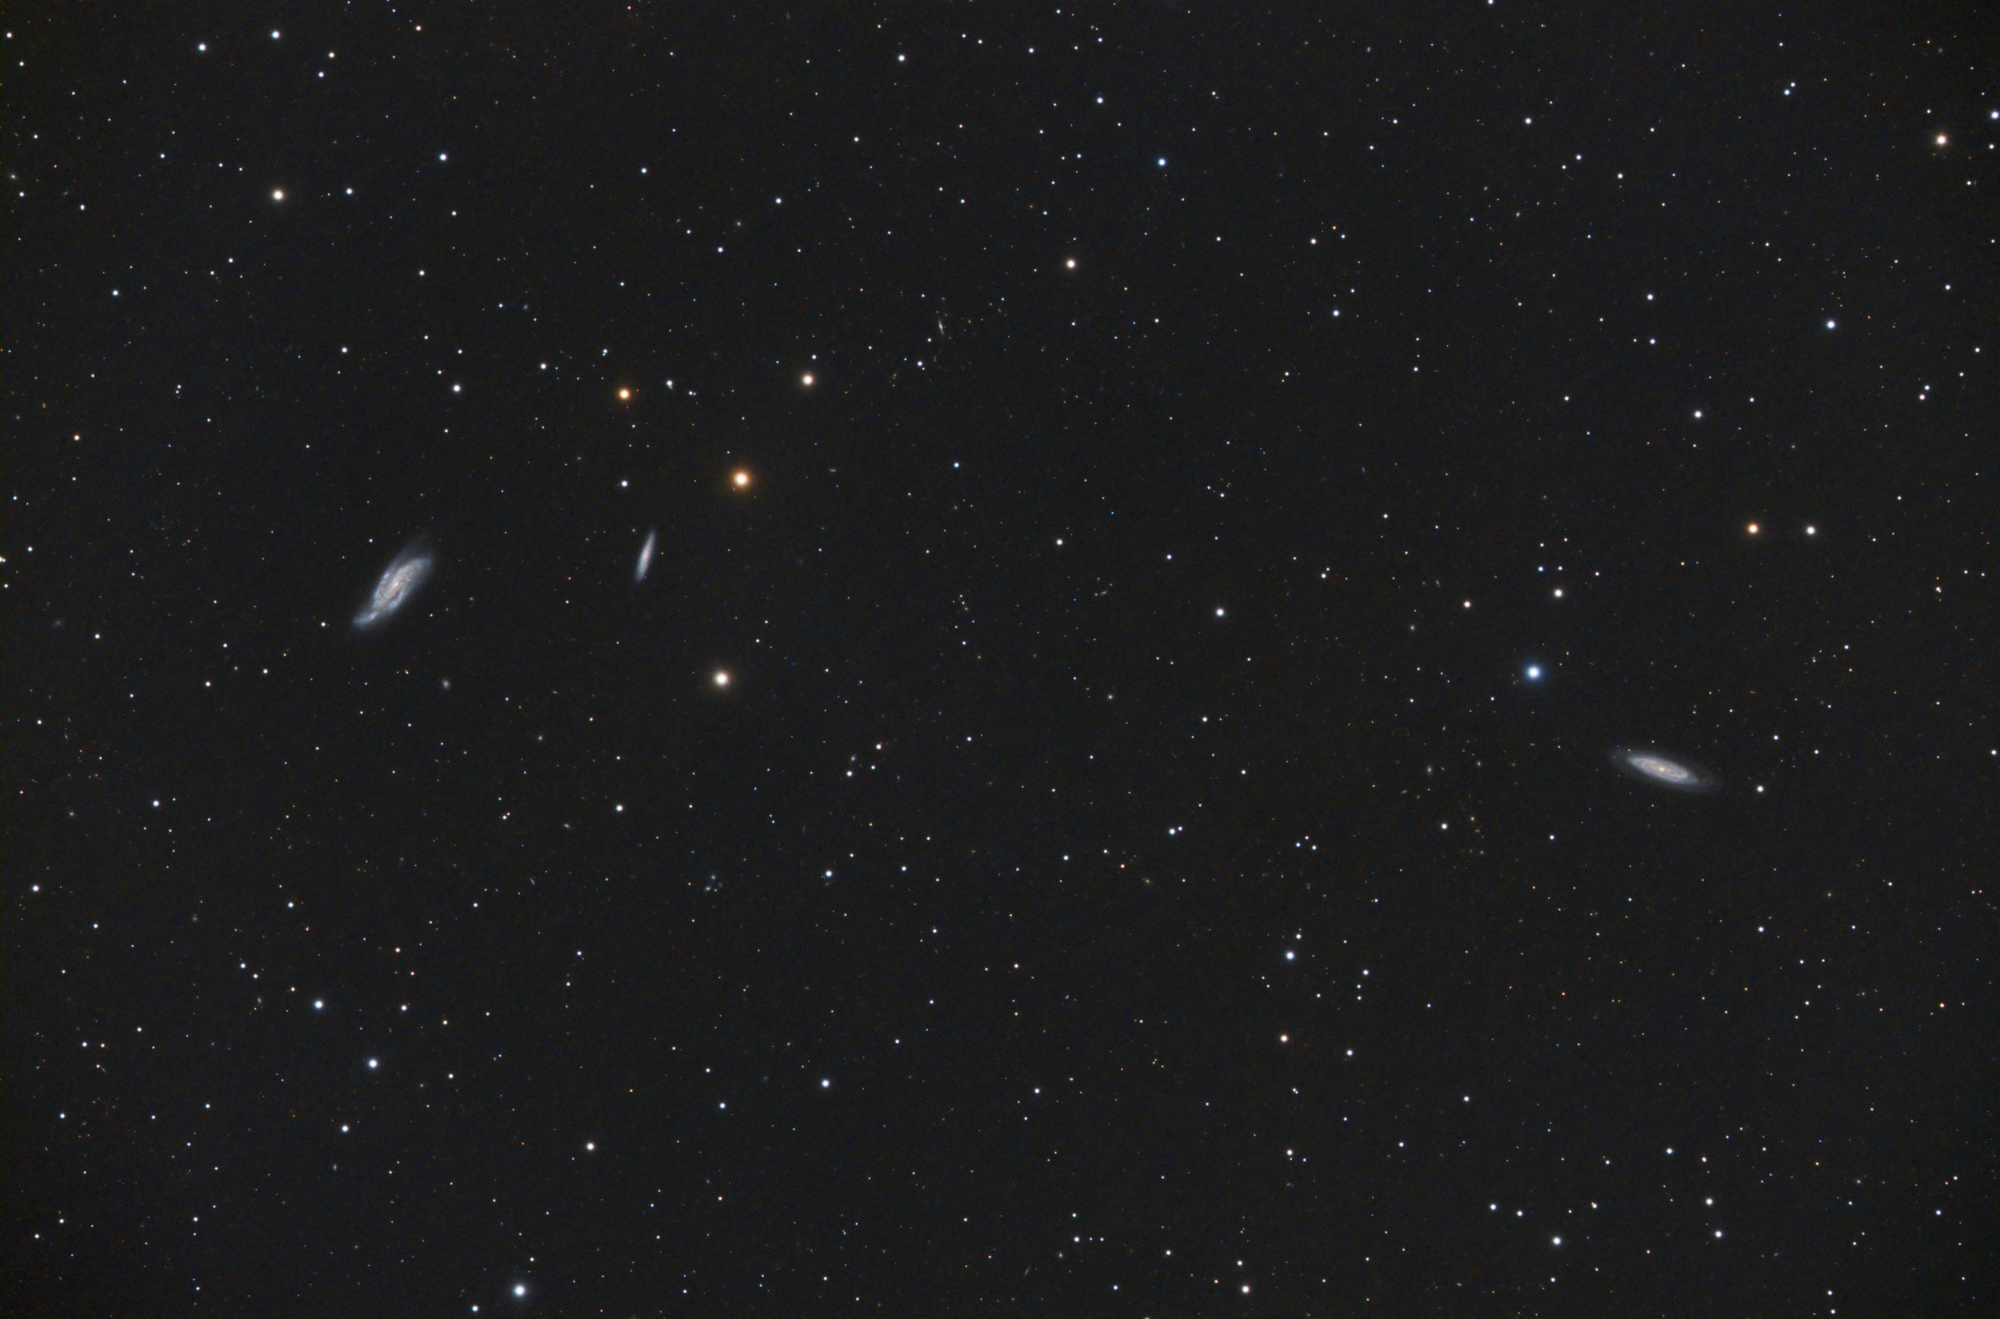 NGC_4088_&_NGC_4100_SIRIL-1-cs5-3-FINAL-4x.jpg